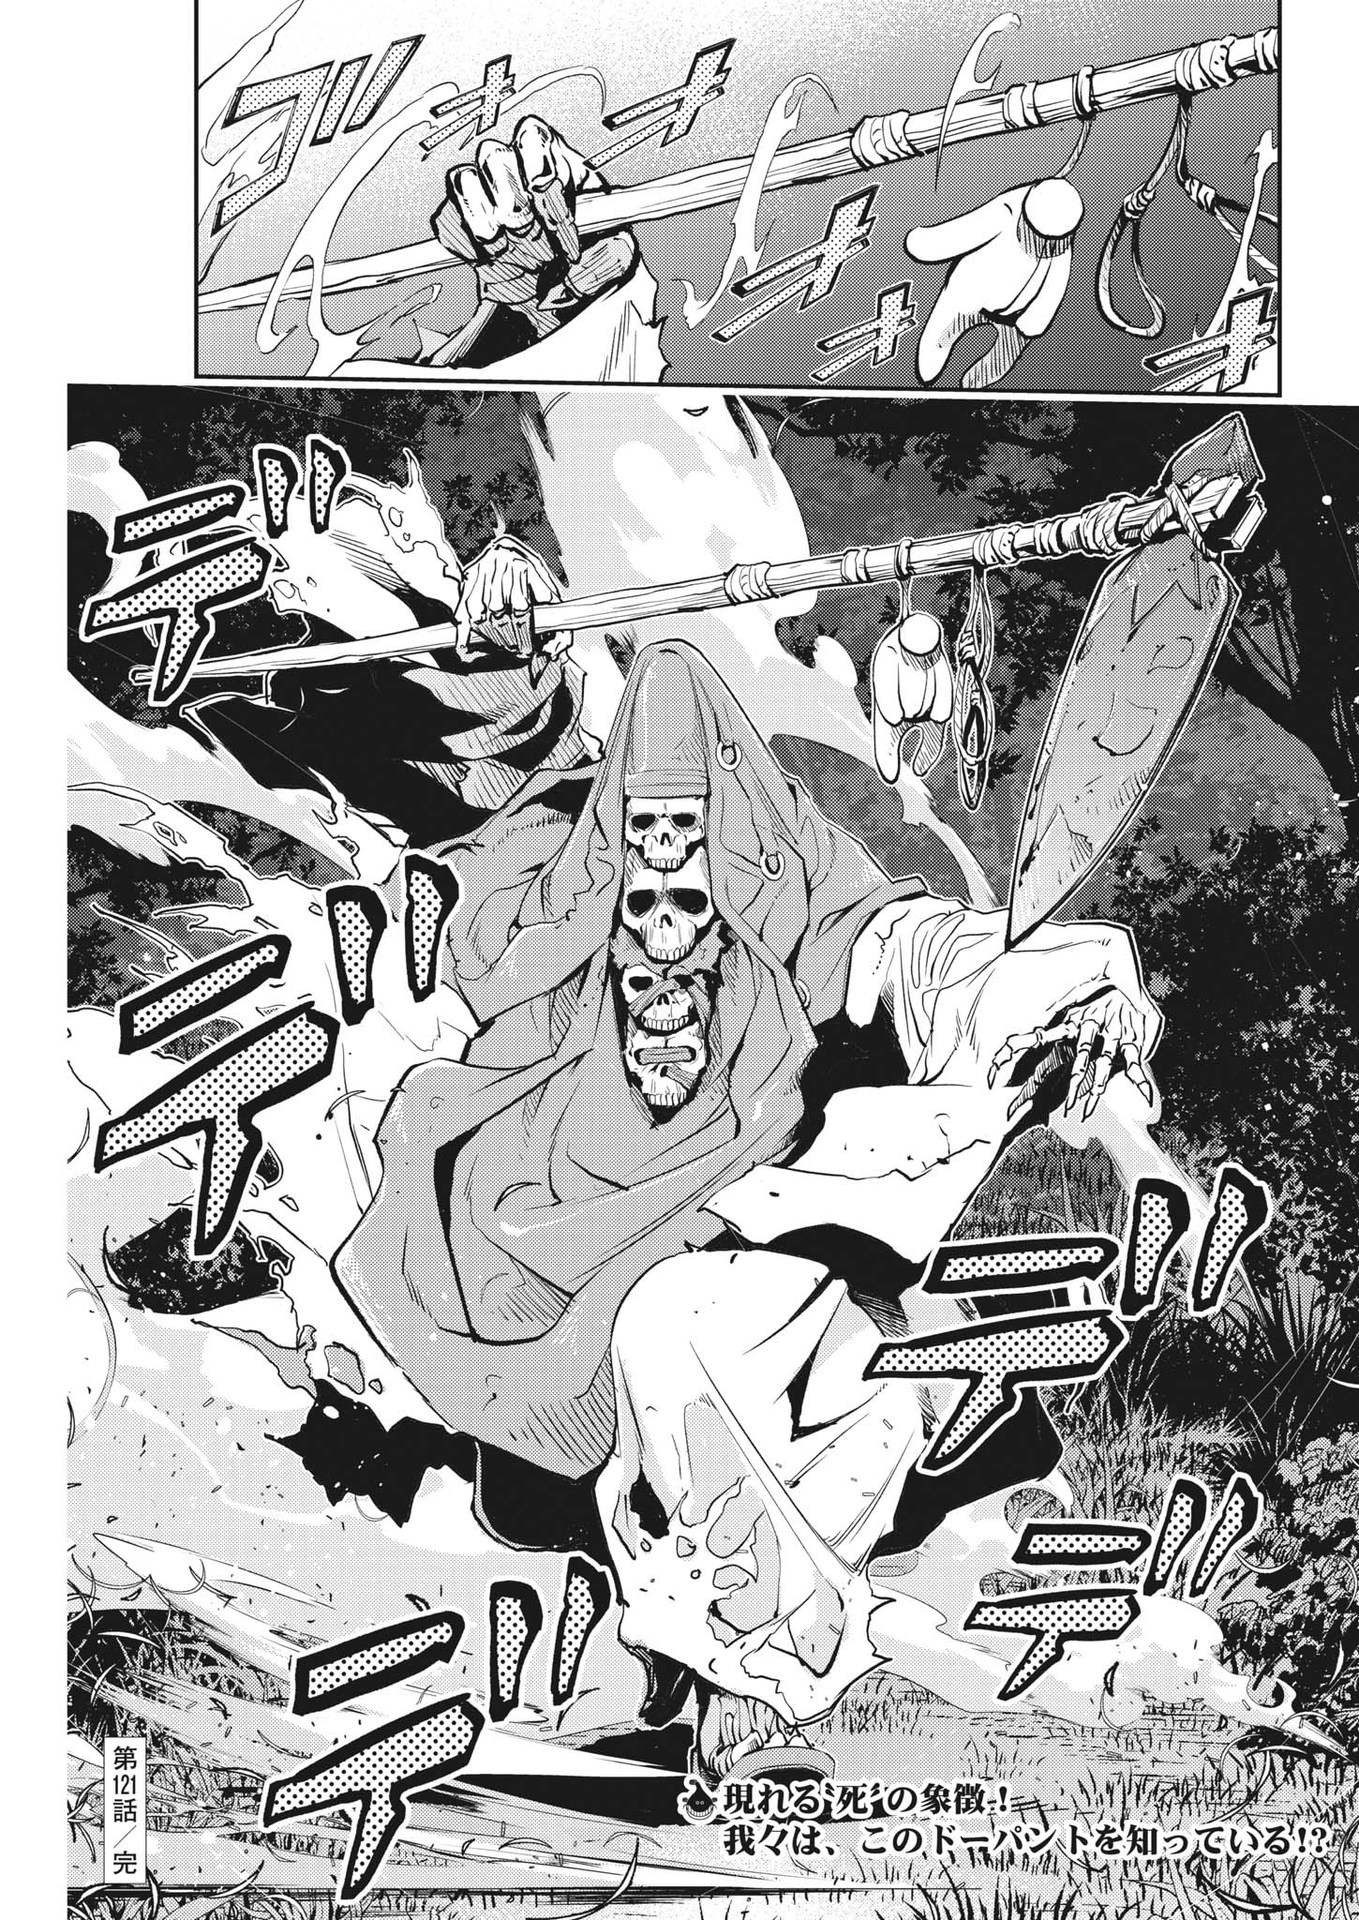 Read Kamen Rider W: Fuuto Tantei 11 - Oni Scan